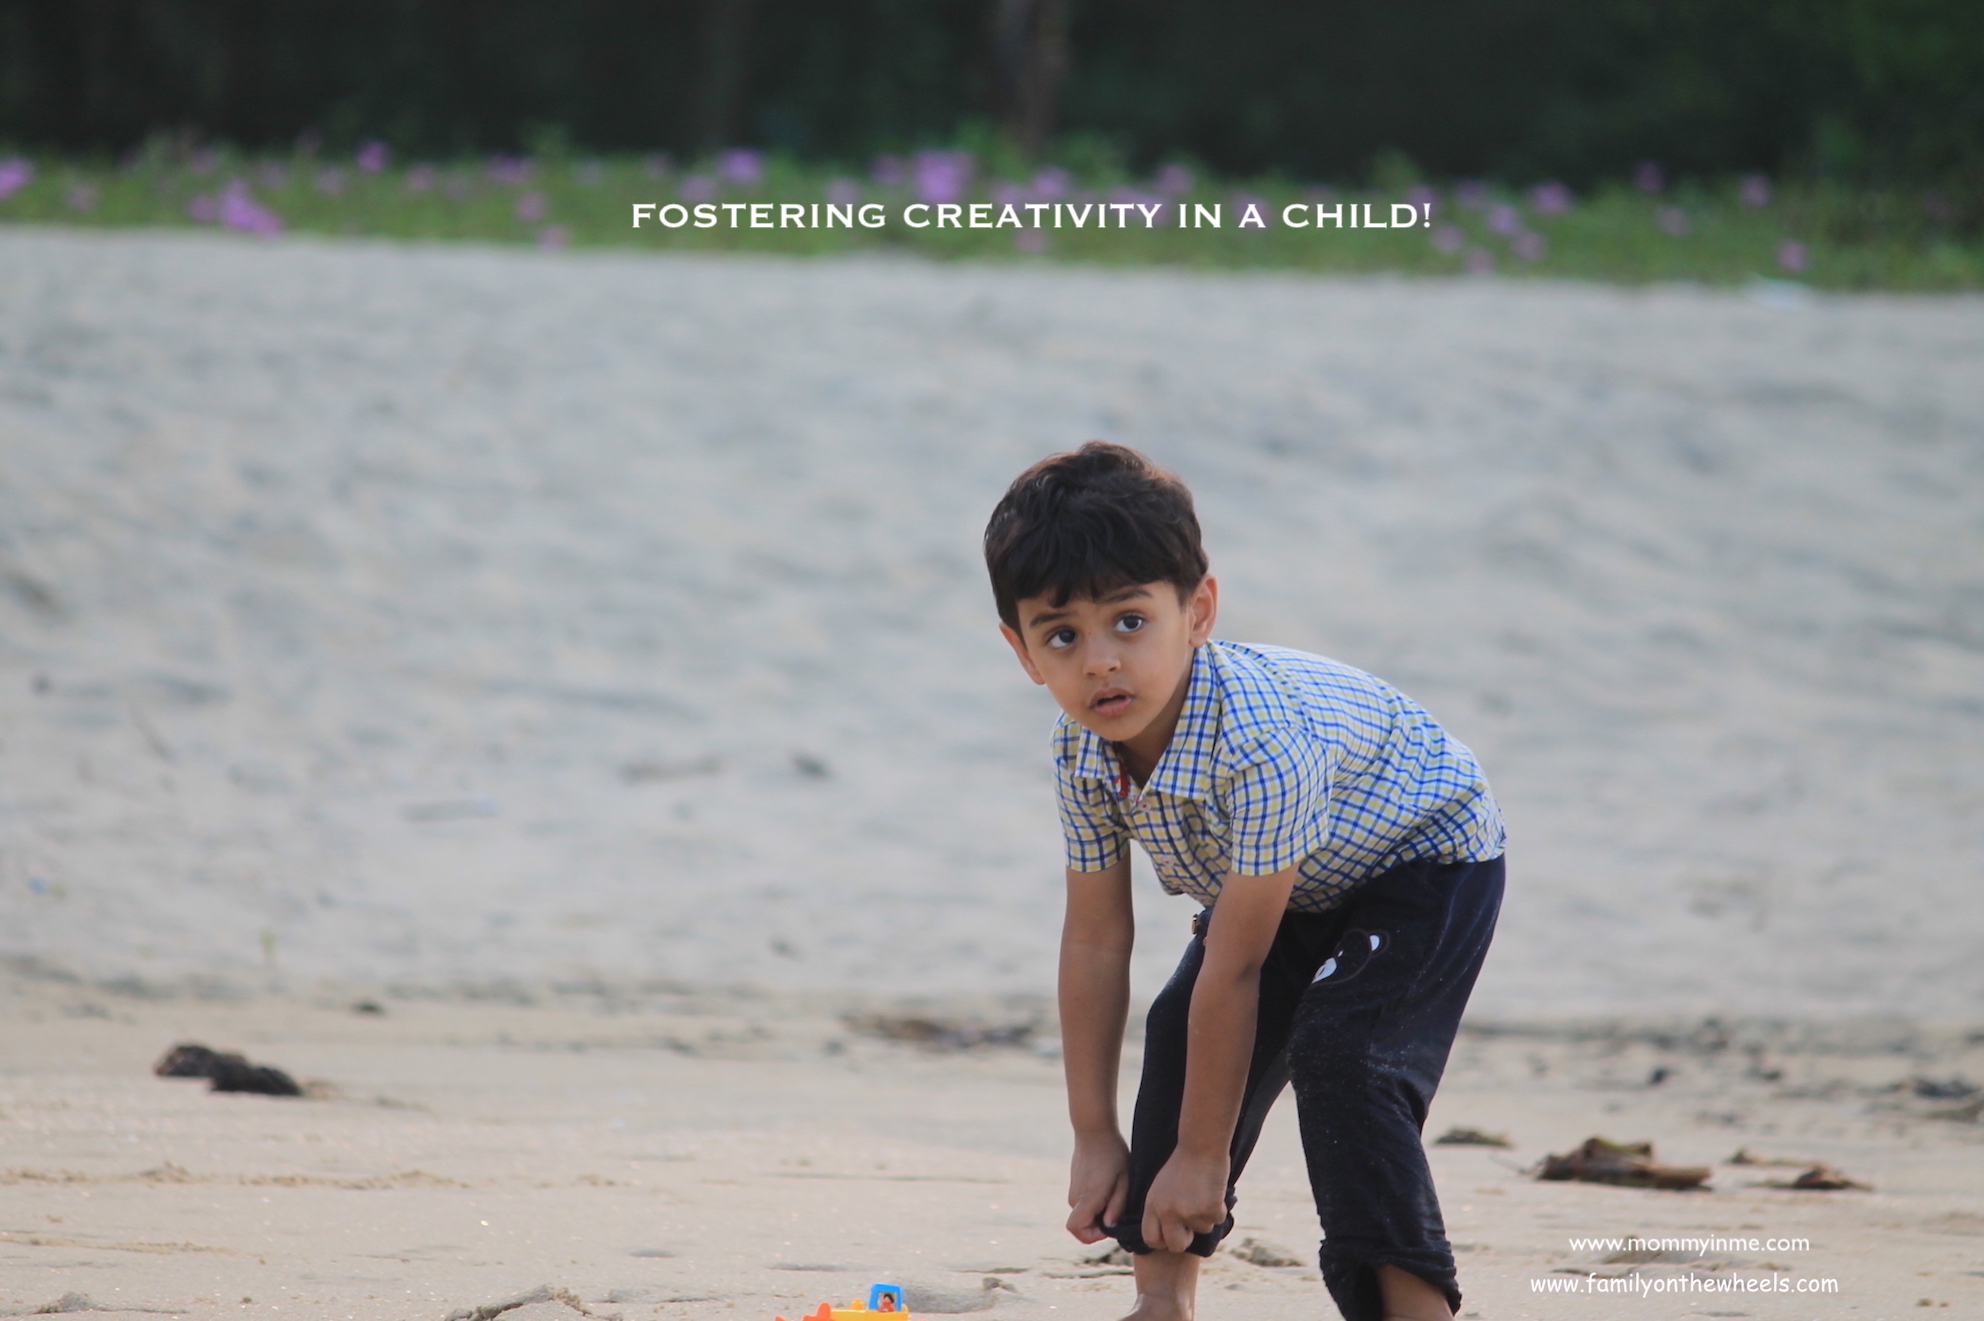 Its time to nurture creativity in kids. Best ways to foster creativity in children #creativity #imagination #fostercreativity #positiveparenting #creativechild #development #lego #freeplay